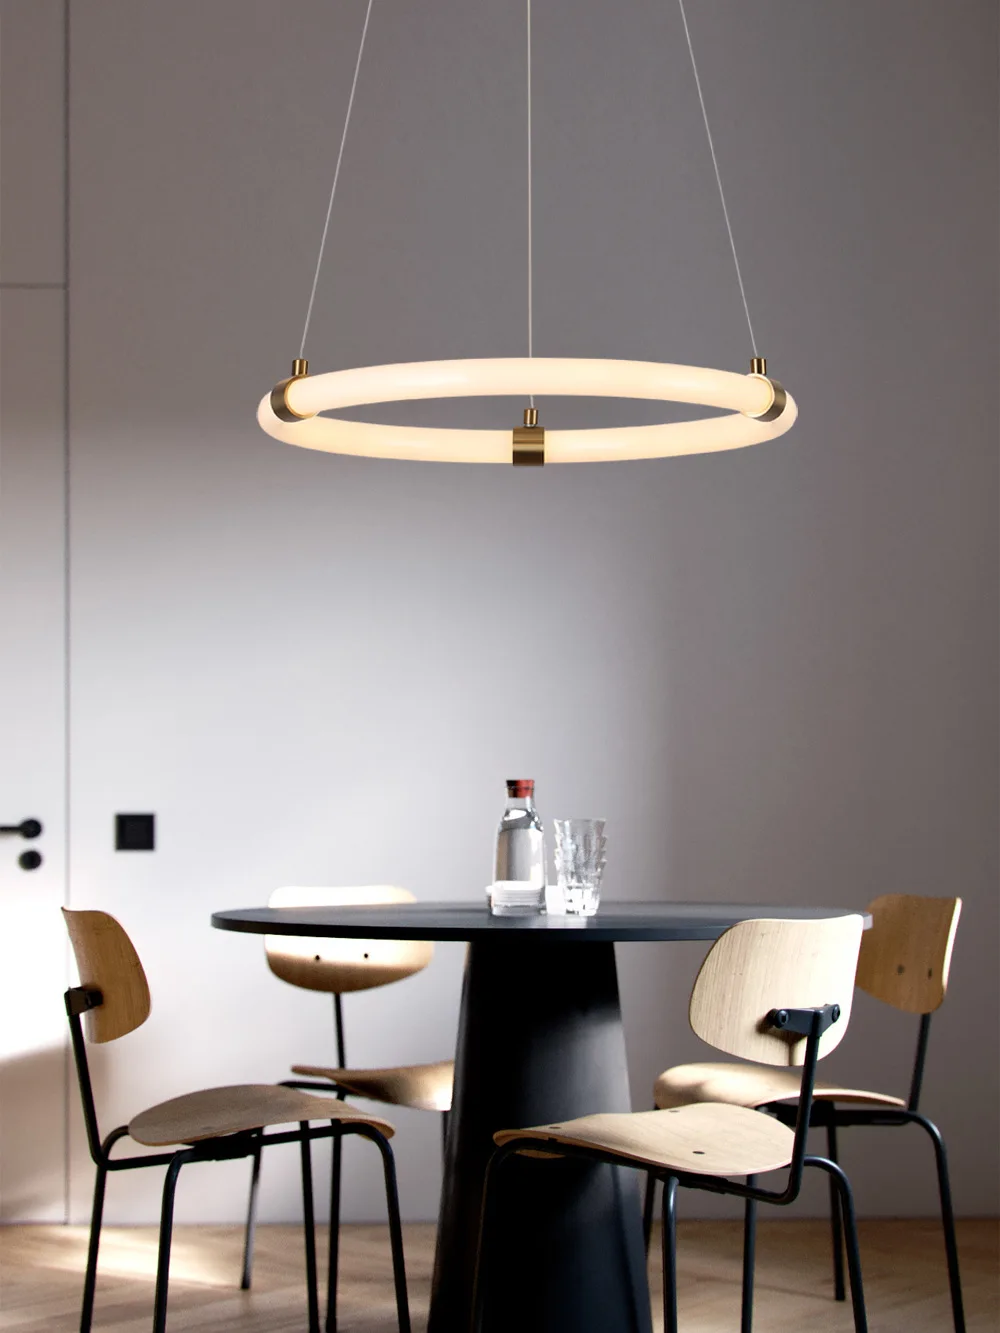 Factory outlet led chandelier modern creative dining chandelier simple 360 degree led pendant light